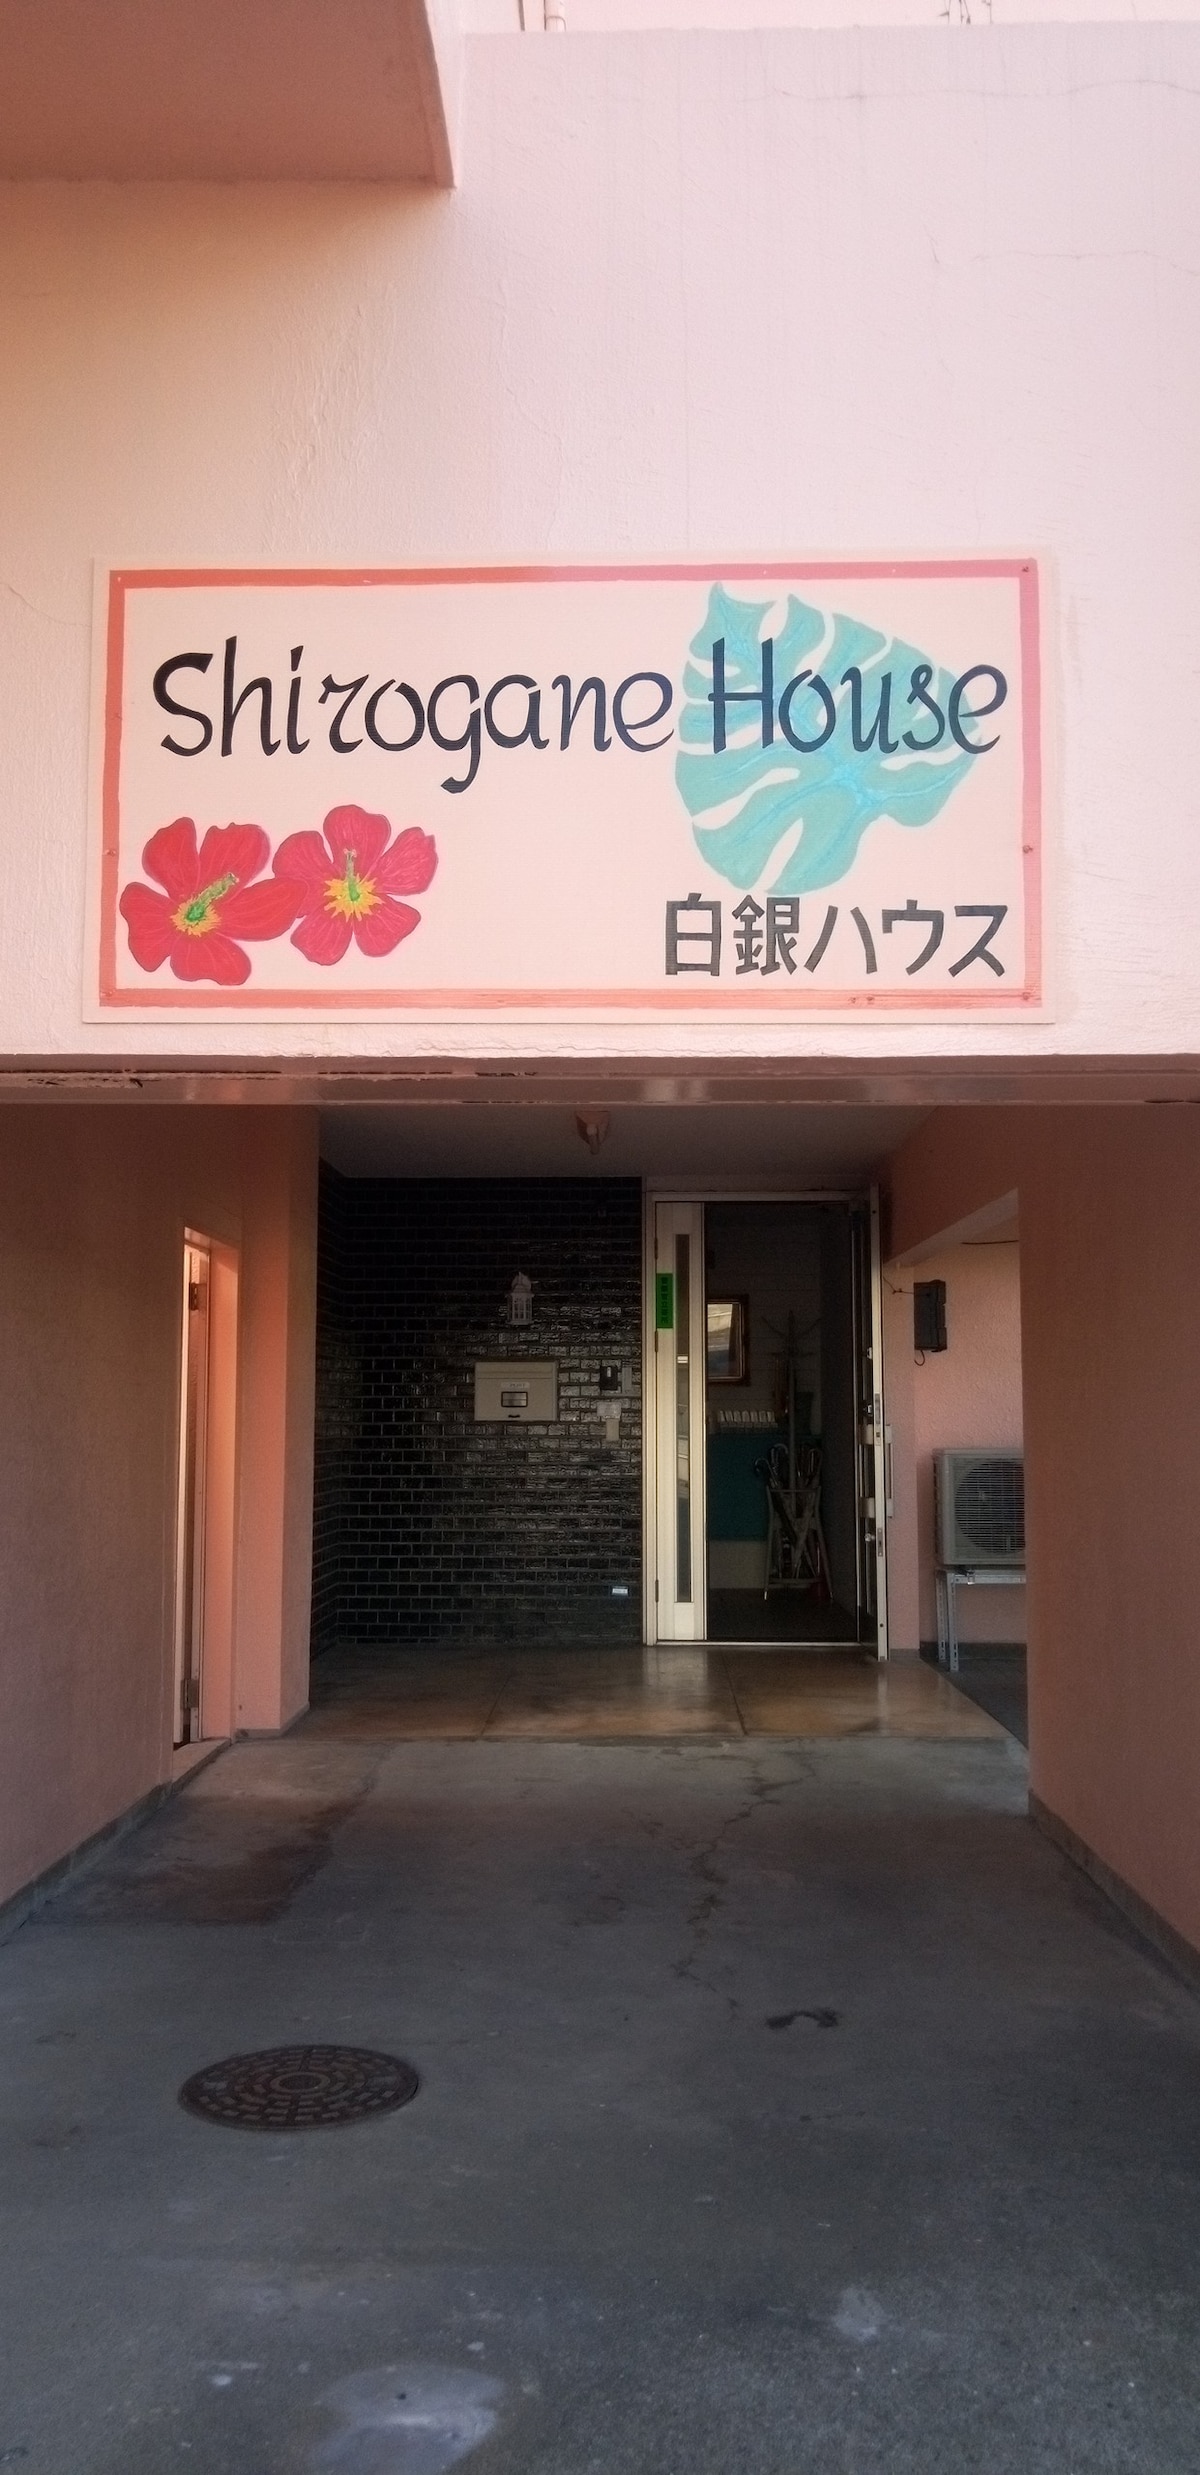 Shirogane House距离Kan Nasakishi晨市仅3分钟。从JR Shiragane站步行3分钟即可抵达。